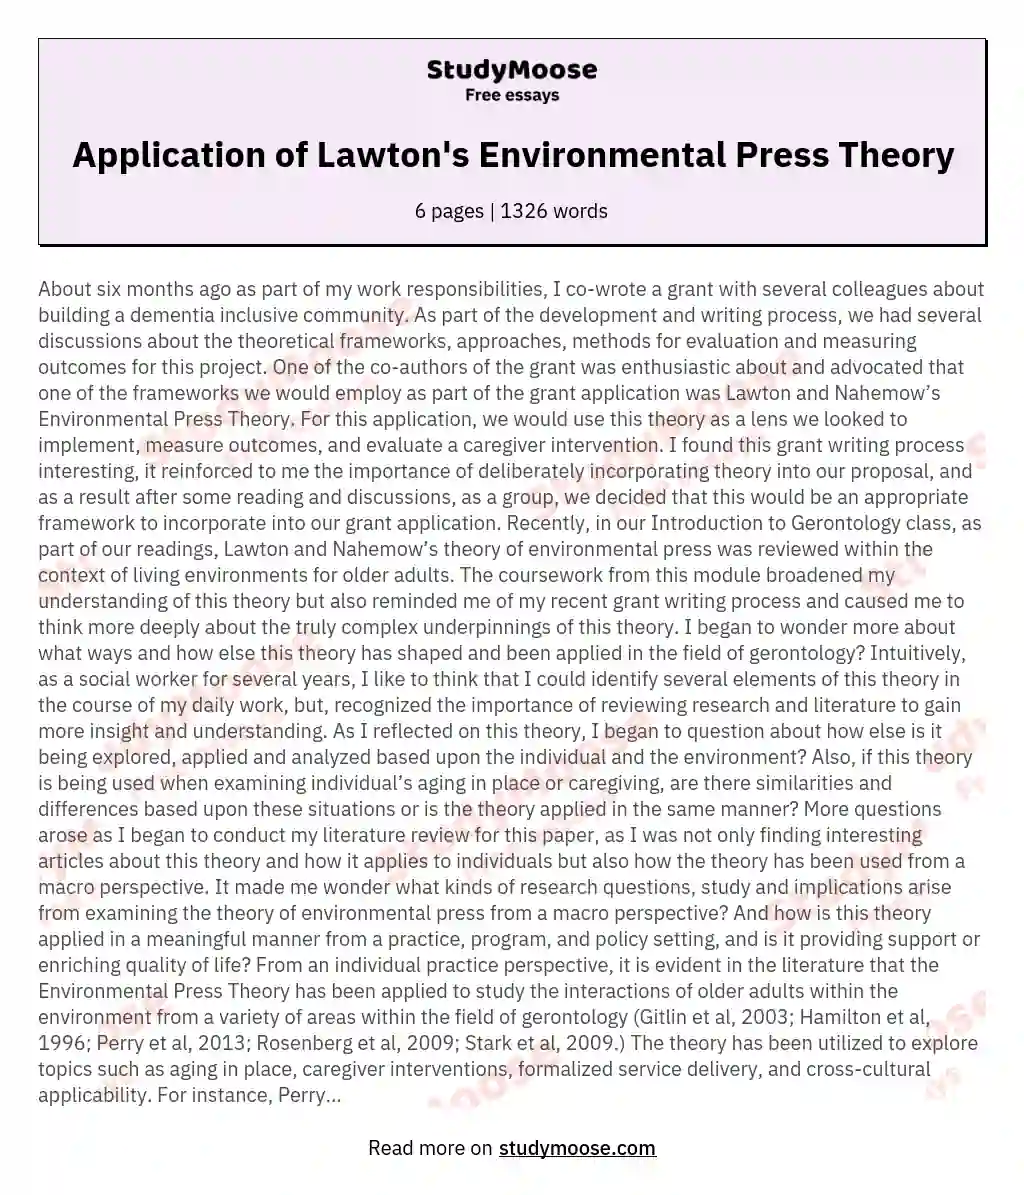 Application of Lawton's Environmental Press Theory essay